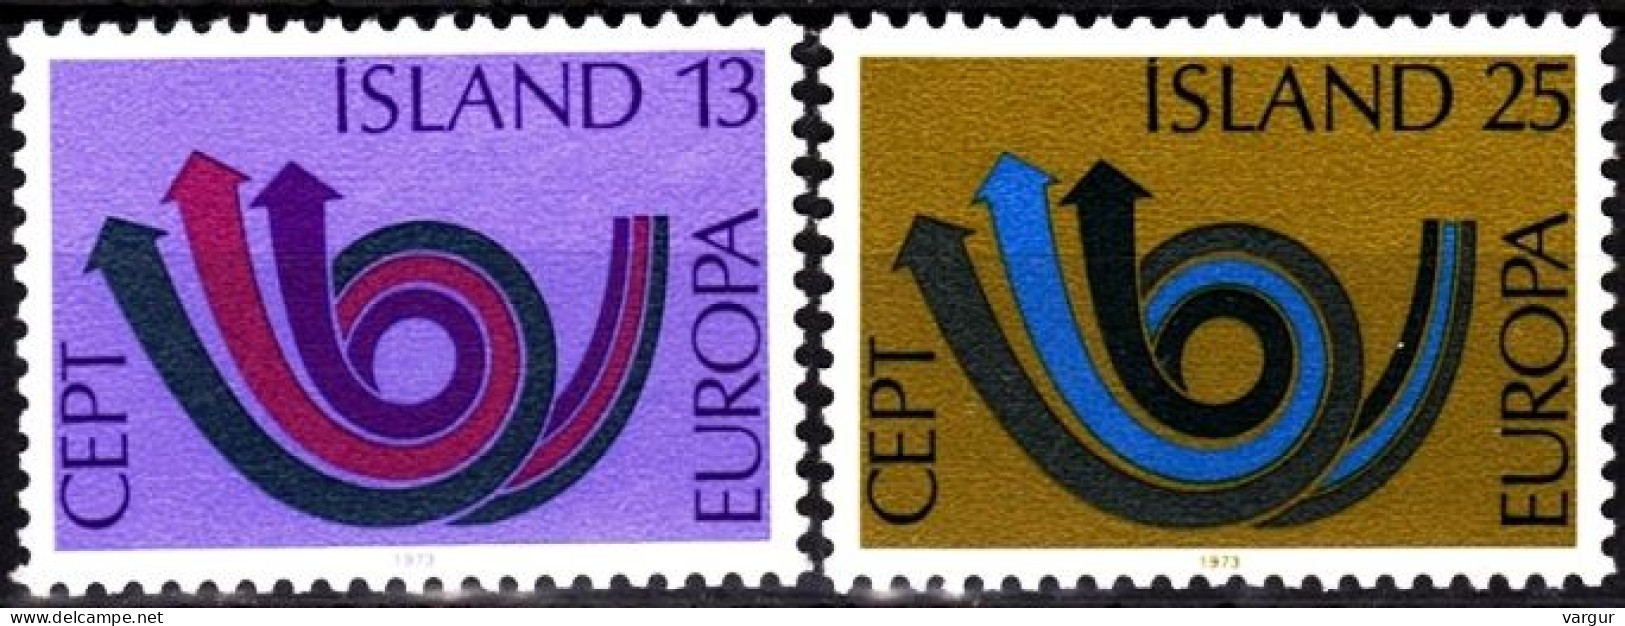 ICELAND / ISLAND 1973 EUROPA. Complete Set, MNH - 1973